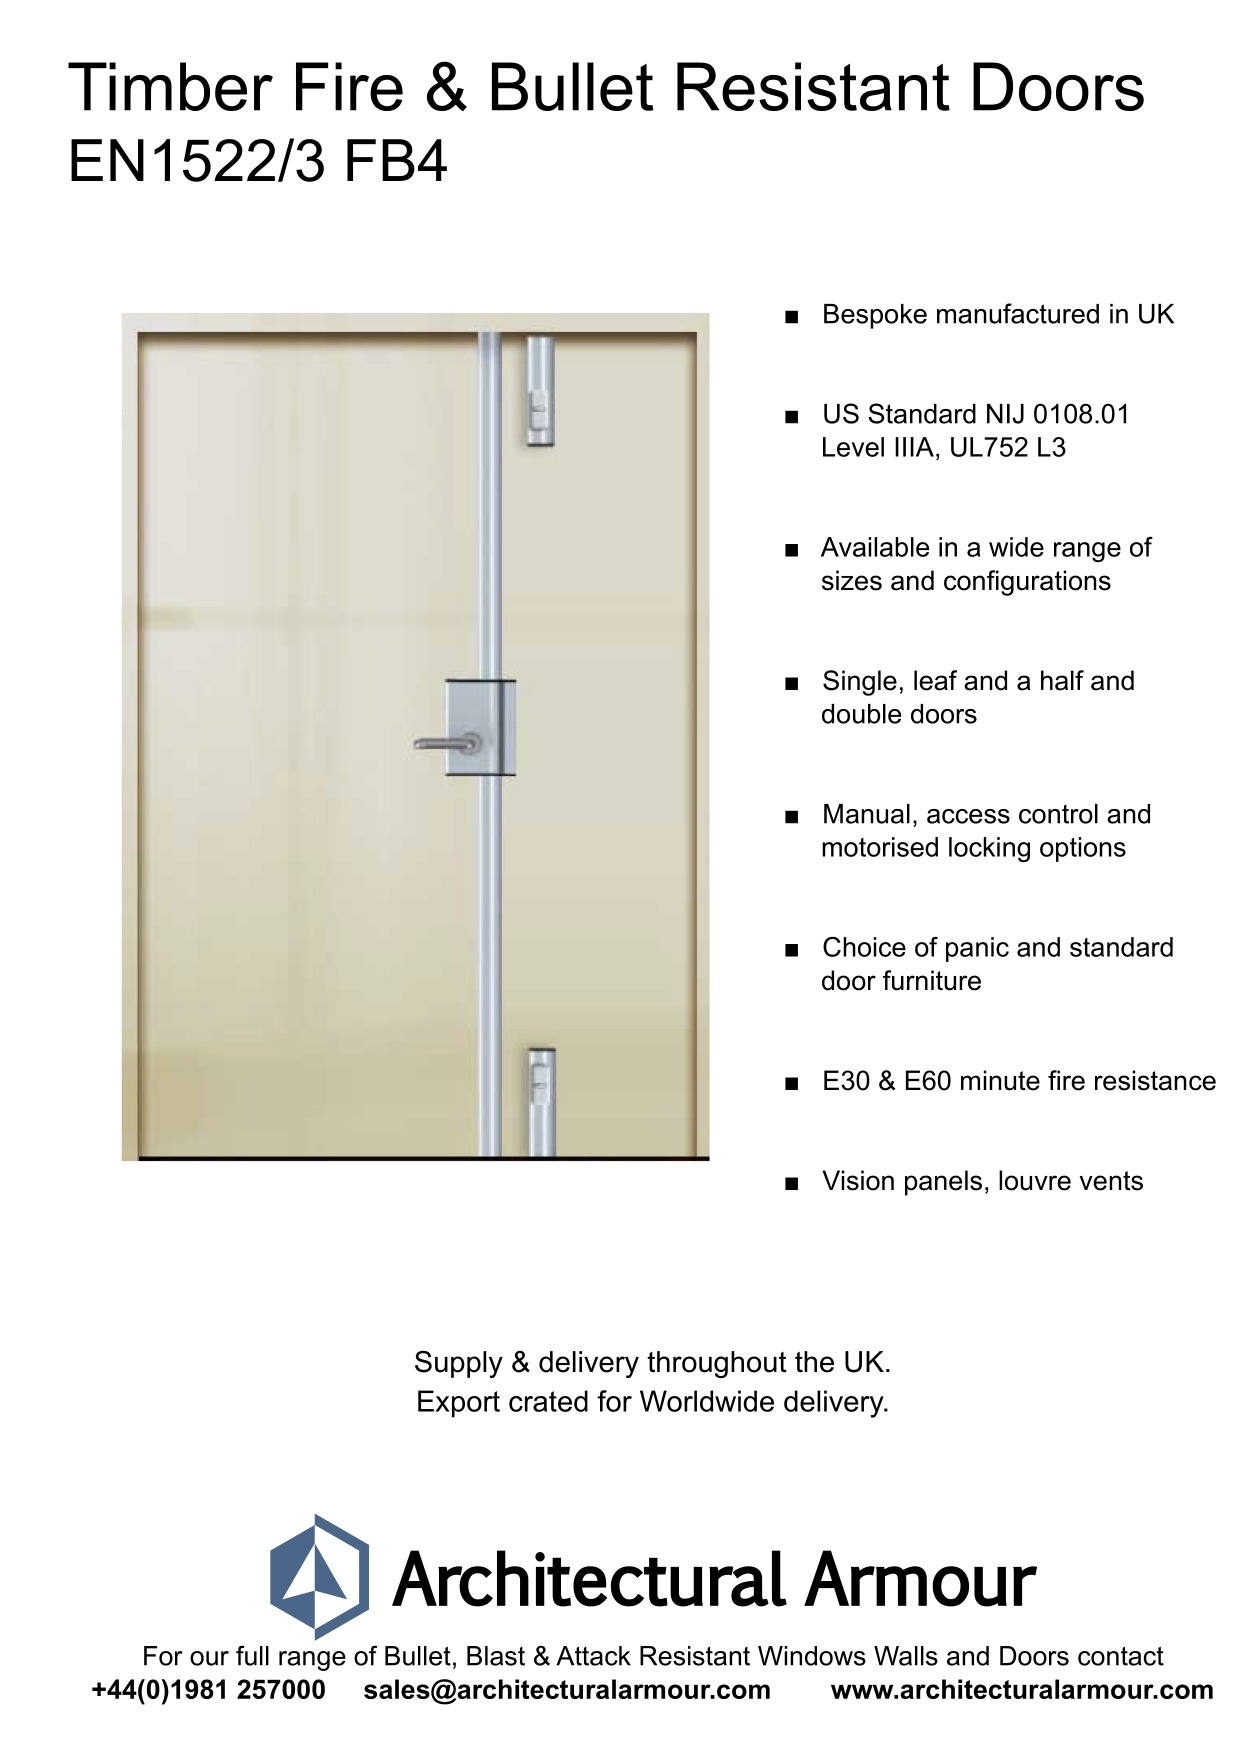 Fire-Resistant-and-Bullet-Resistant-EN1522-3-FB4-Timber-Doors